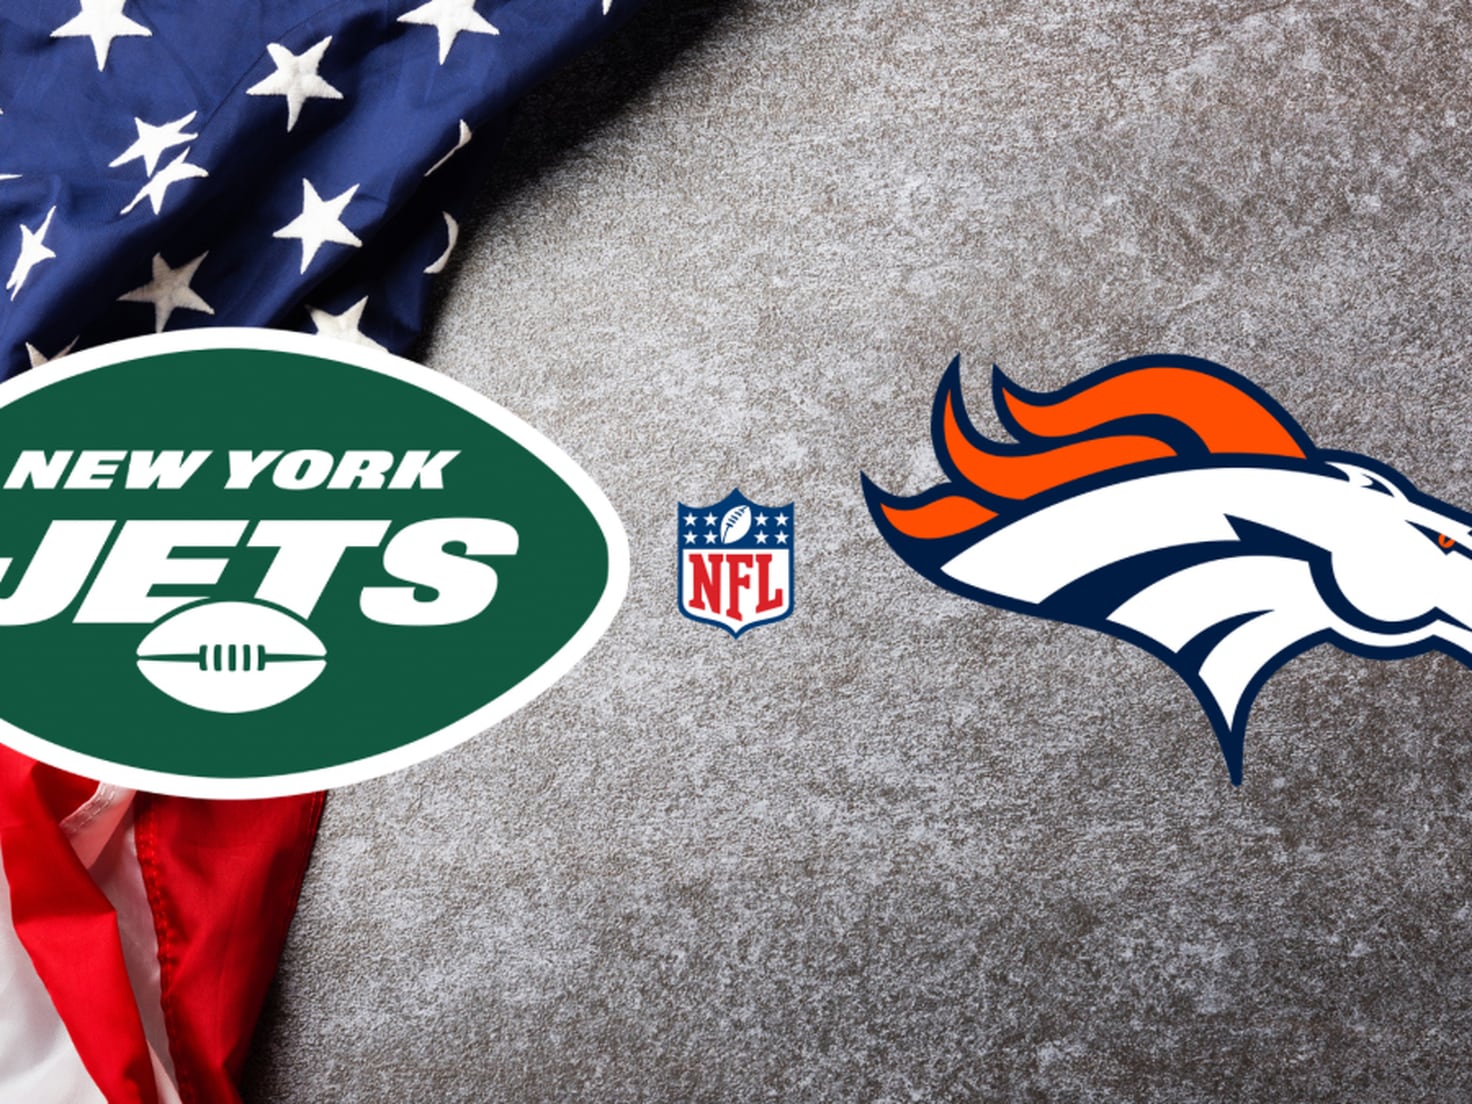 New York Jets vs. Kansas City Chiefs: How to watch NFL online, TV